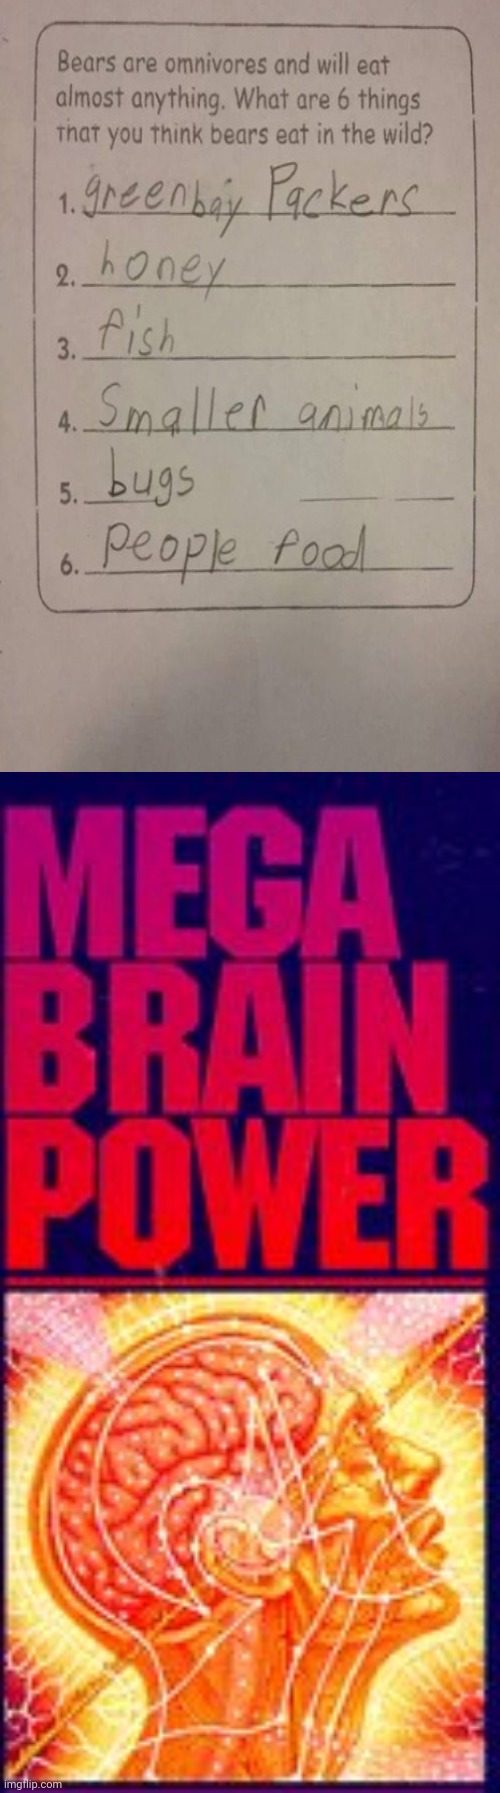 Bears | image tagged in mega brain power,memes,meme,bears,answers,answer | made w/ Imgflip meme maker